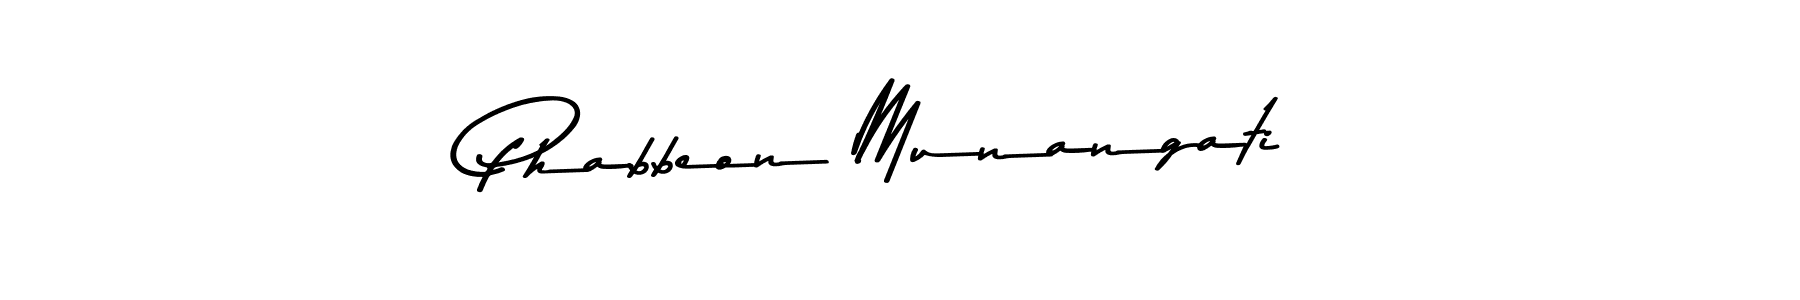 How to Draw Phabbeon Munangati signature style? Asem Kandis PERSONAL USE is a latest design signature styles for name Phabbeon Munangati. Phabbeon Munangati signature style 9 images and pictures png